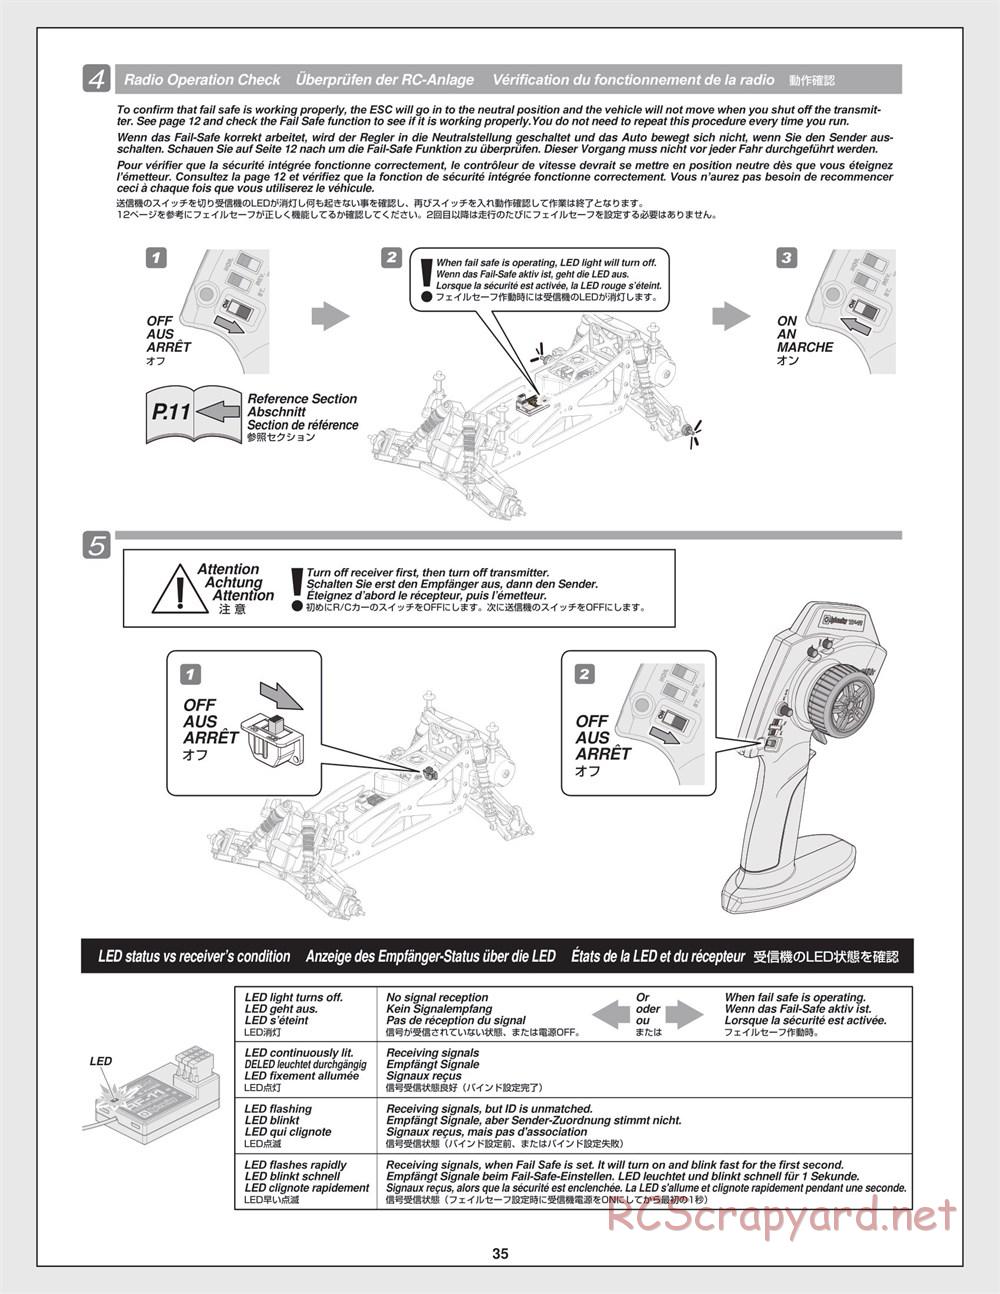 HPI - Jumpshot ST - Manual - Page 35